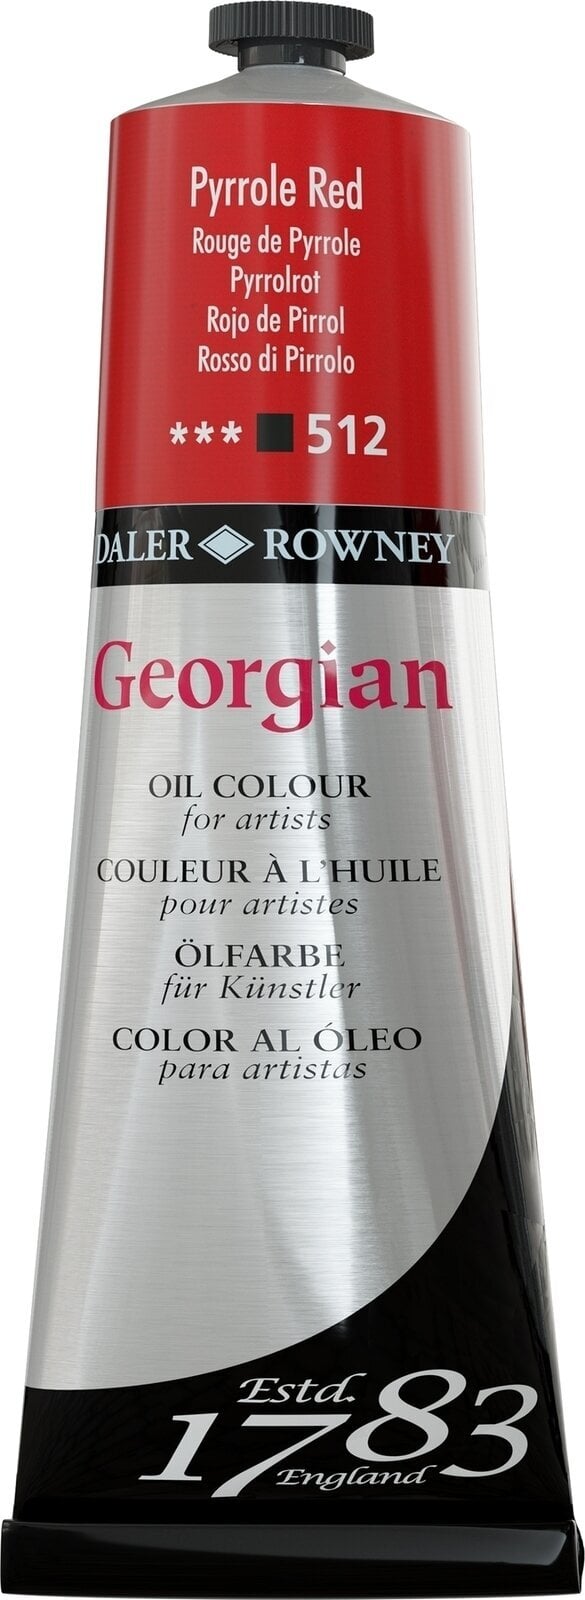 Tempera ad olio Daler Rowney Georgian Pittura a olio Pyrrole Red 225 ml 1 pz